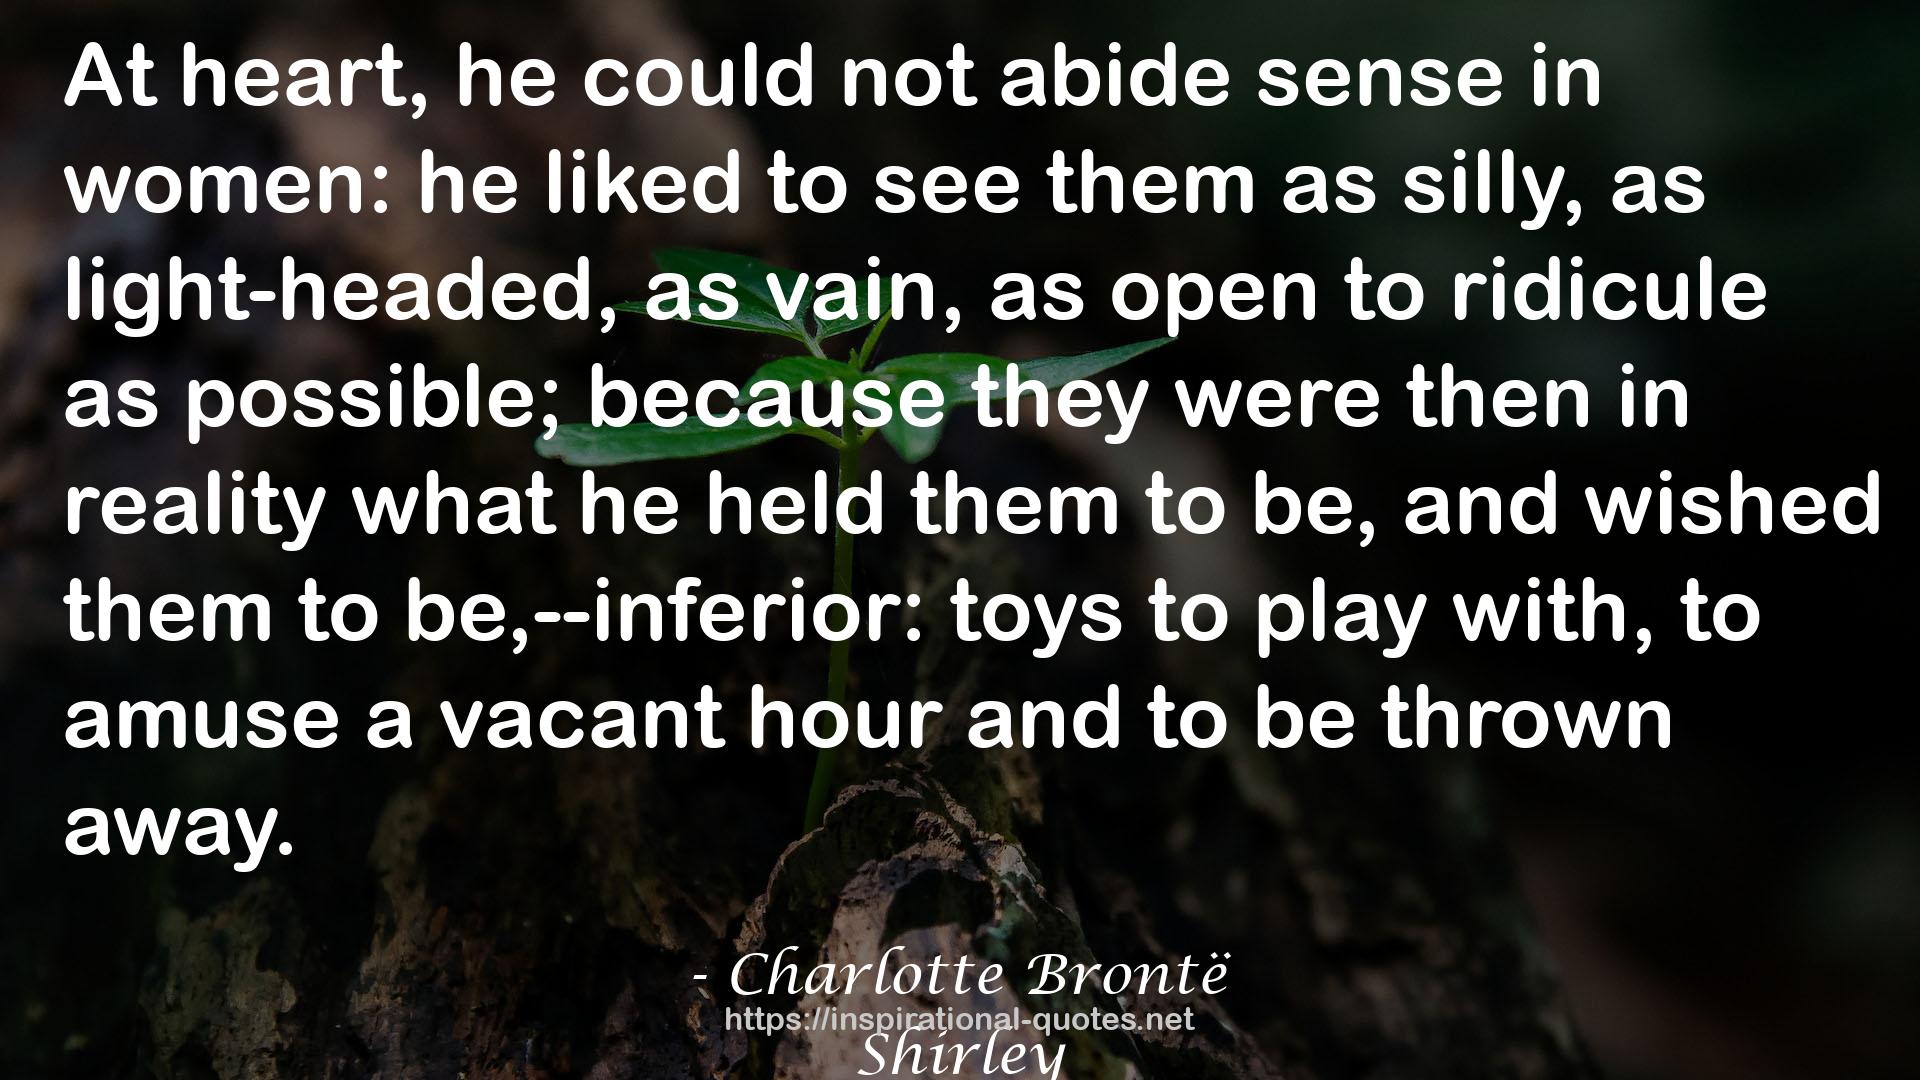 Charlotte Brontë QUOTES